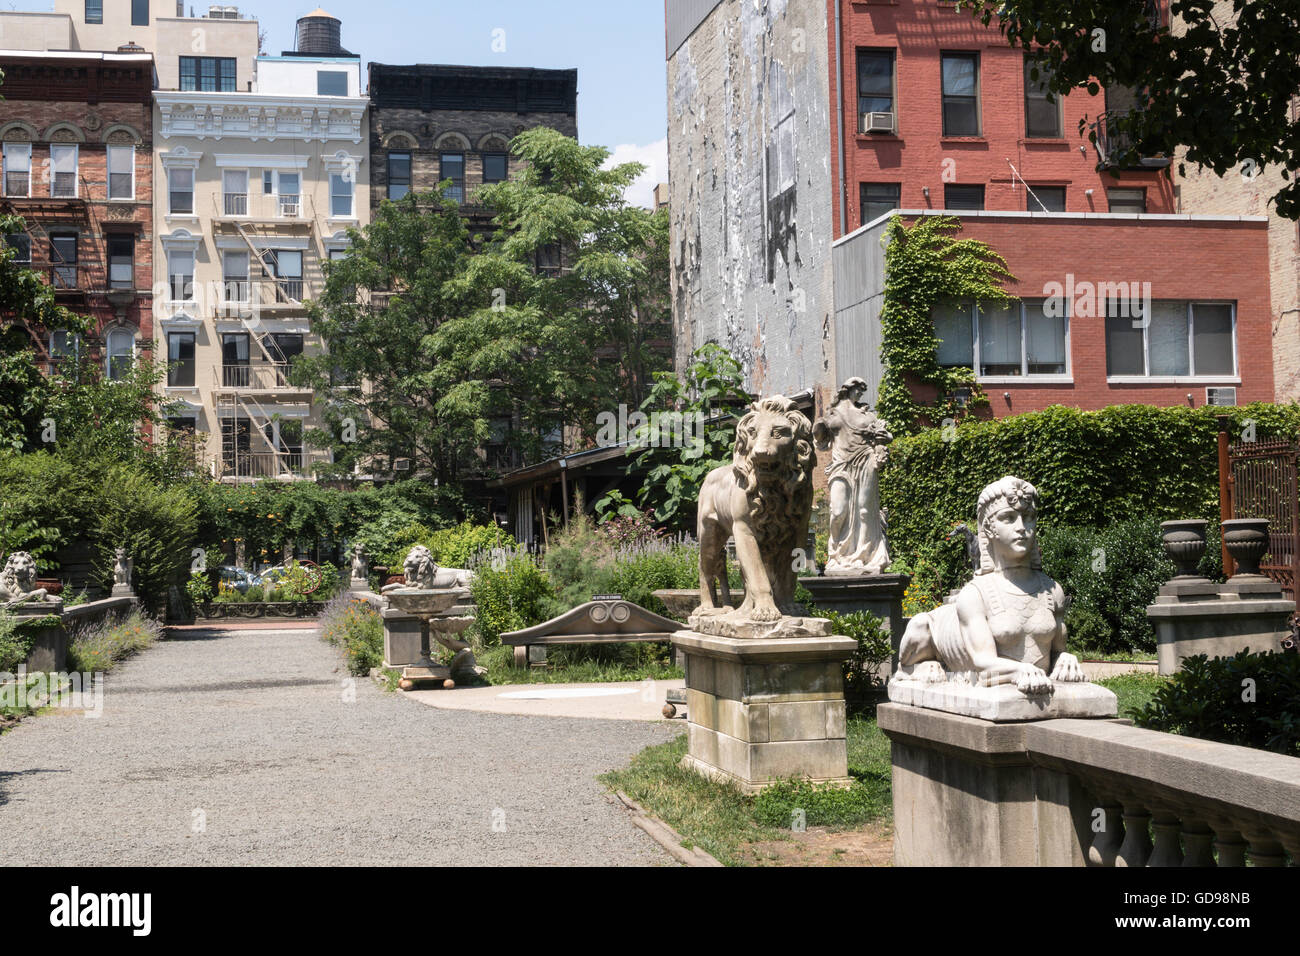 Decorative Statuary in Elizabeth Street Sculpture Garden, NYC Stock Photo